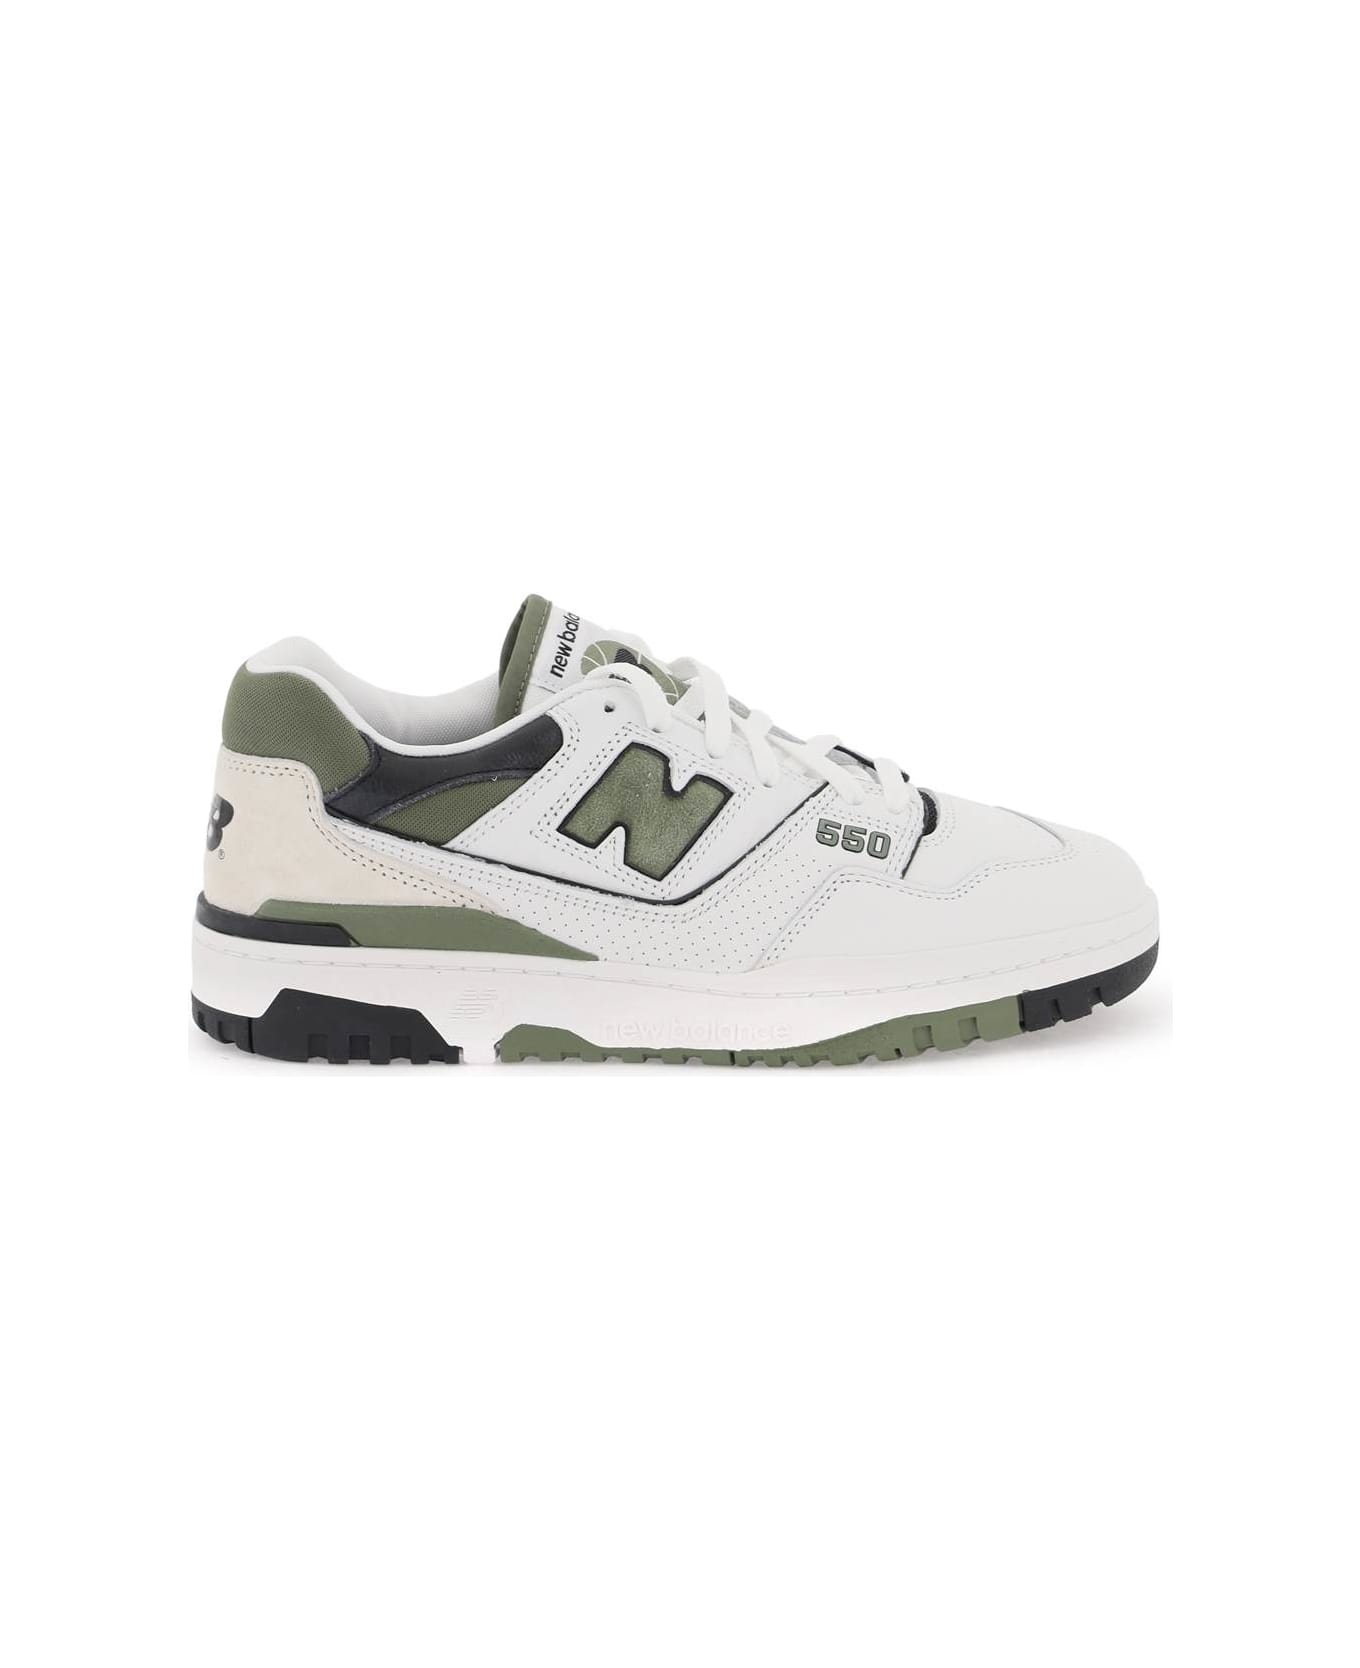 New Balance 550 Sneakers - WHITE GREEN (White)